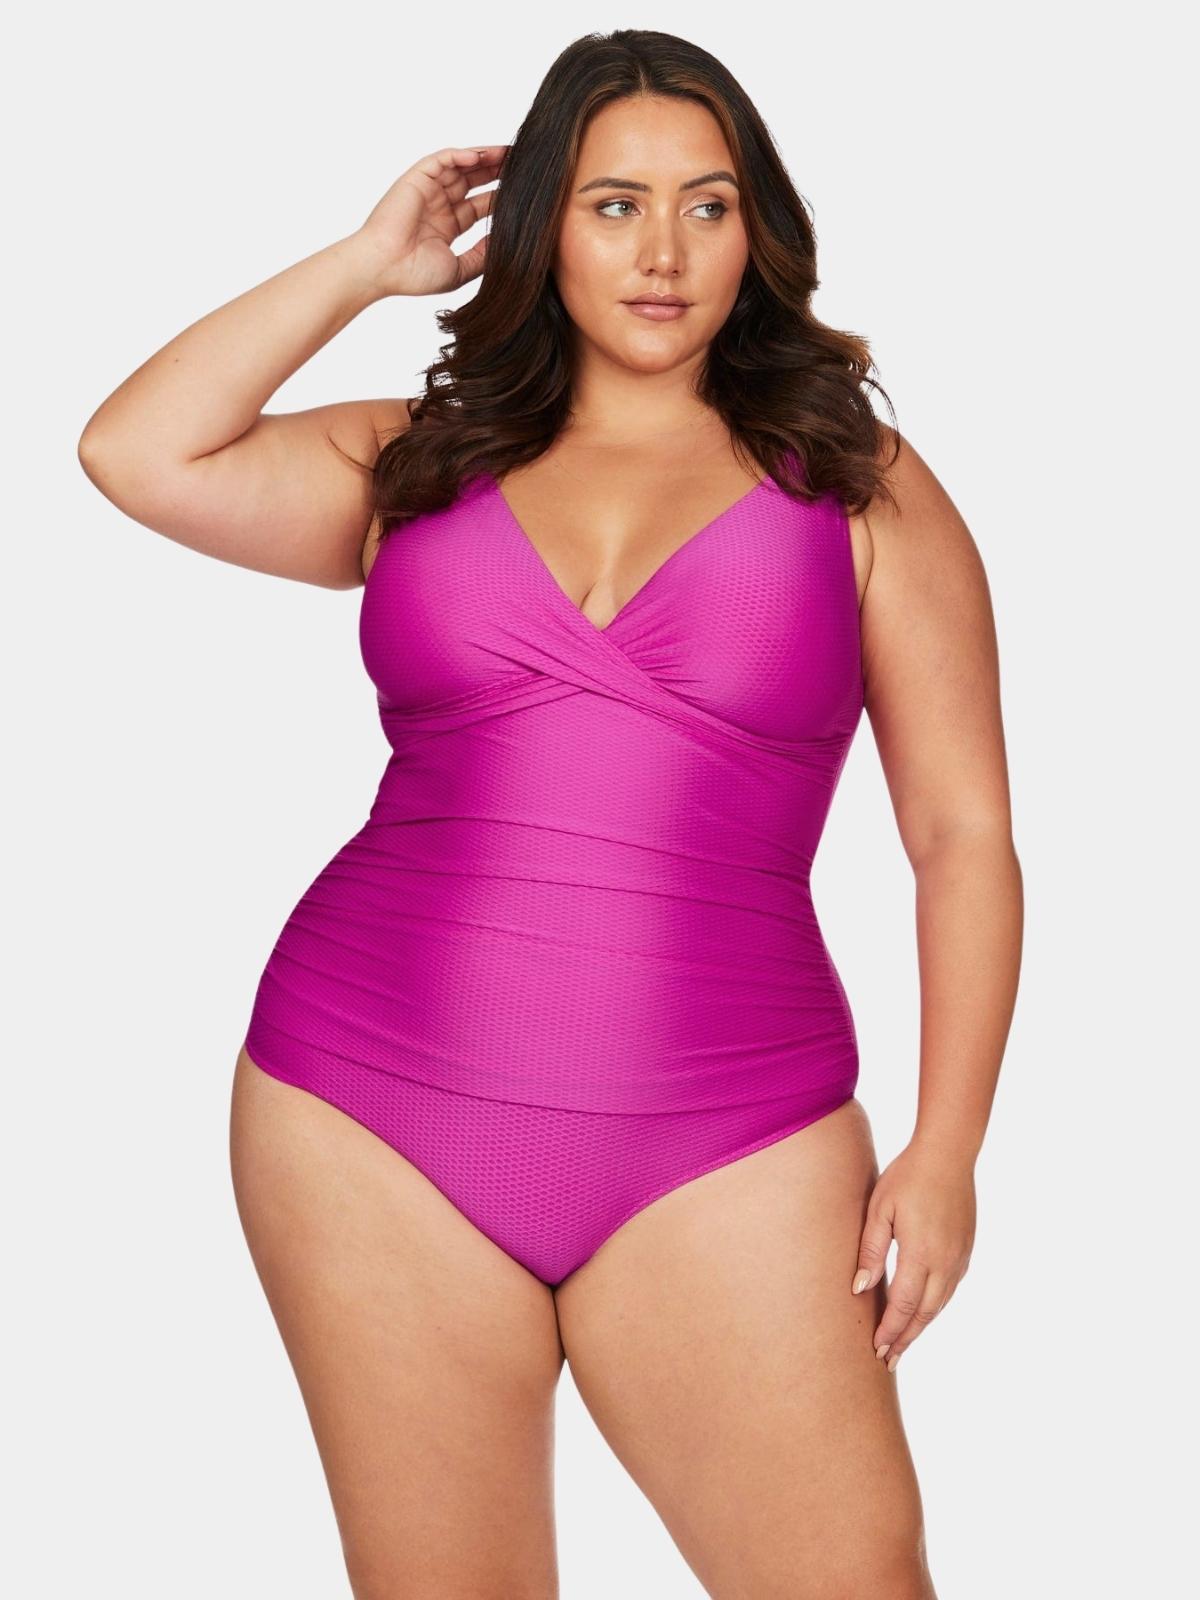 https://www.purelyswim.com/wp-content/uploads/2022/06/artesands-womens-serenade-pink-delacroix-one-piece-swimsuit-front.jpg